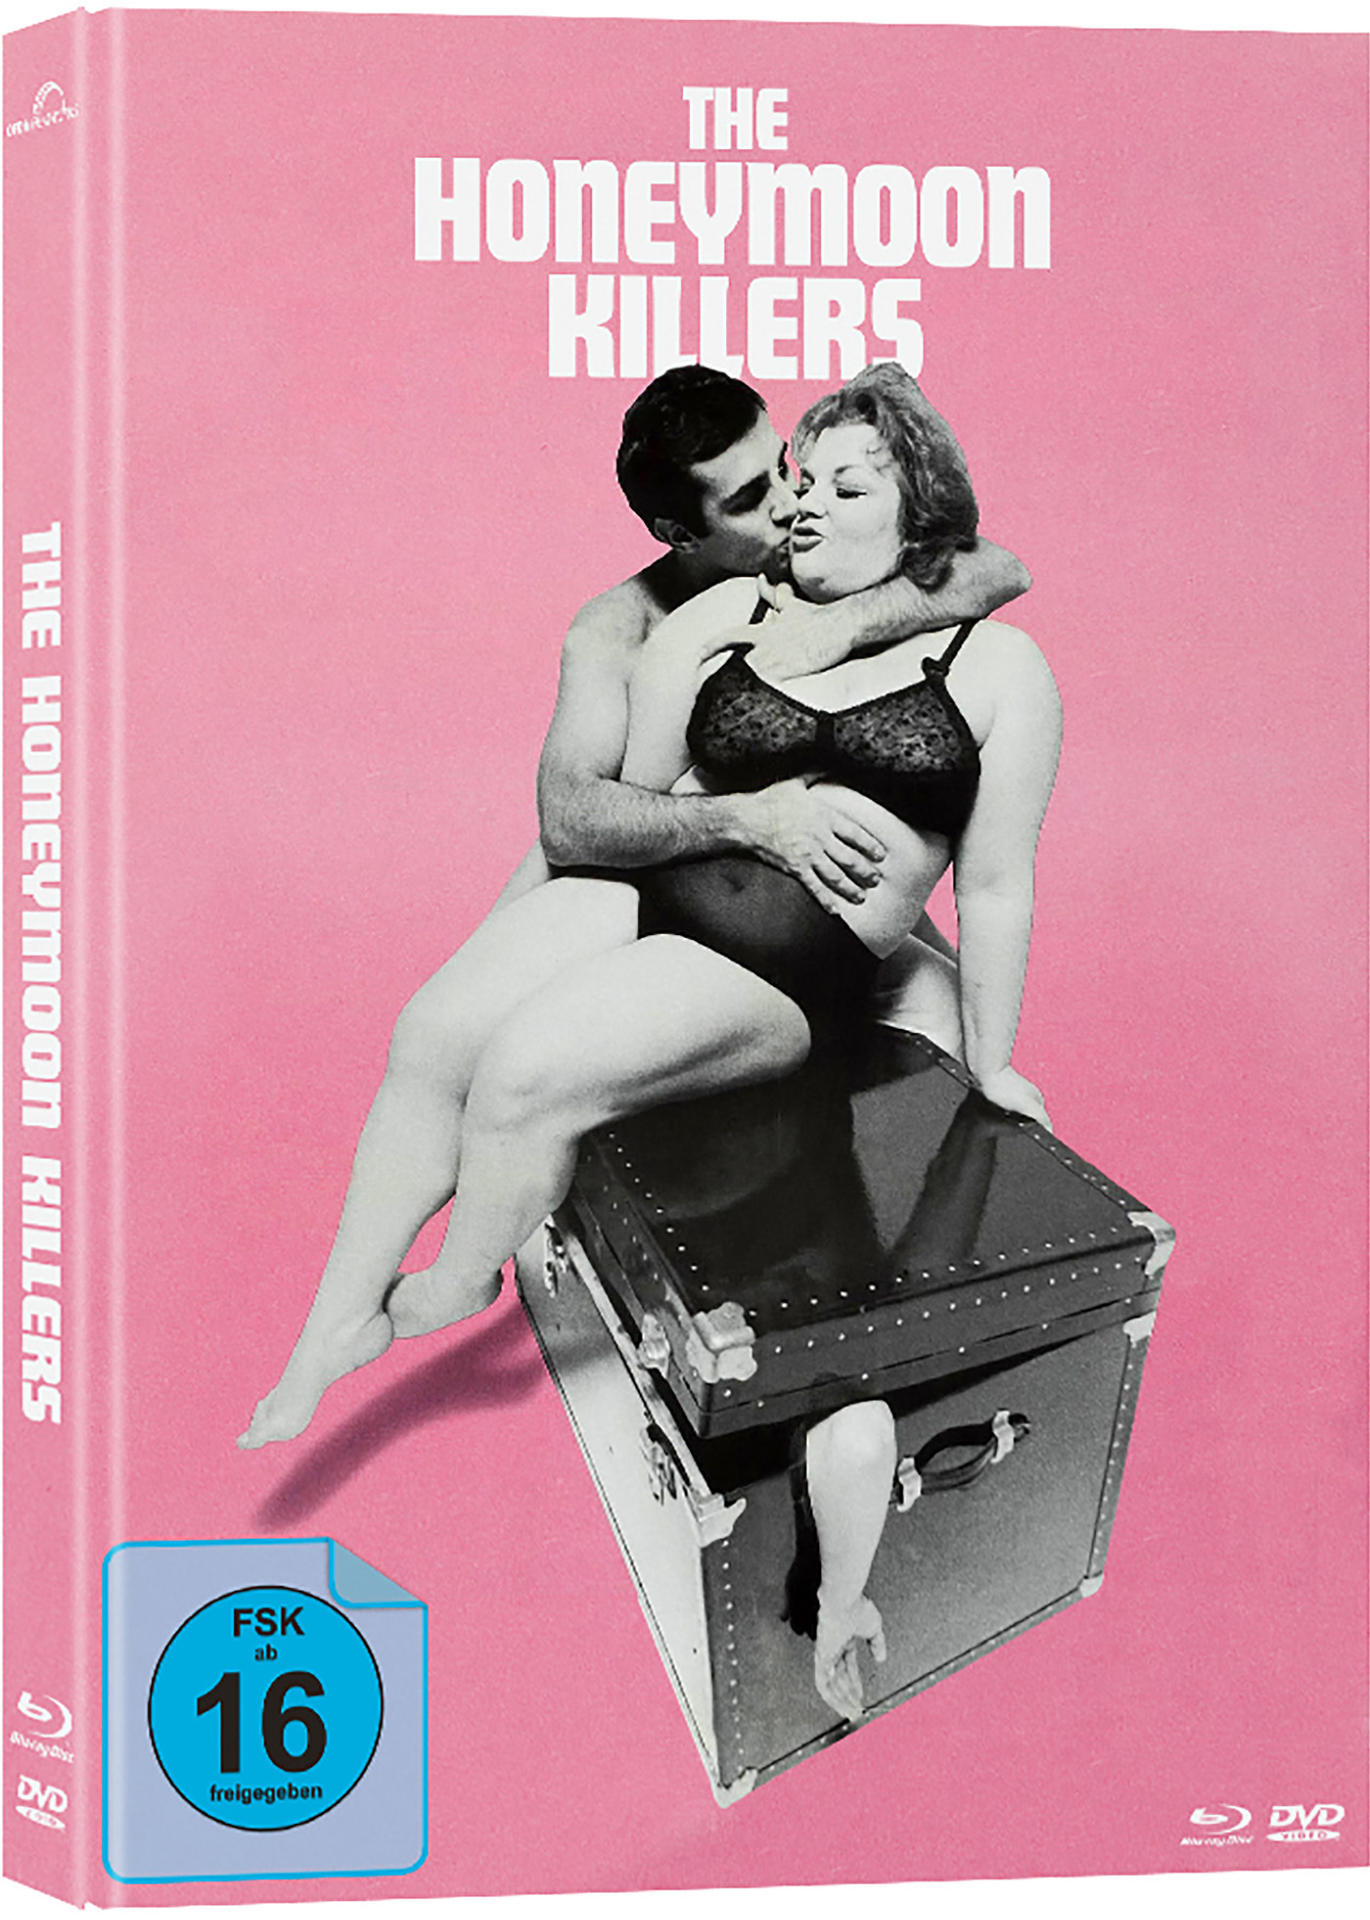 + The Blu-ray DVD Killers Honeymoon